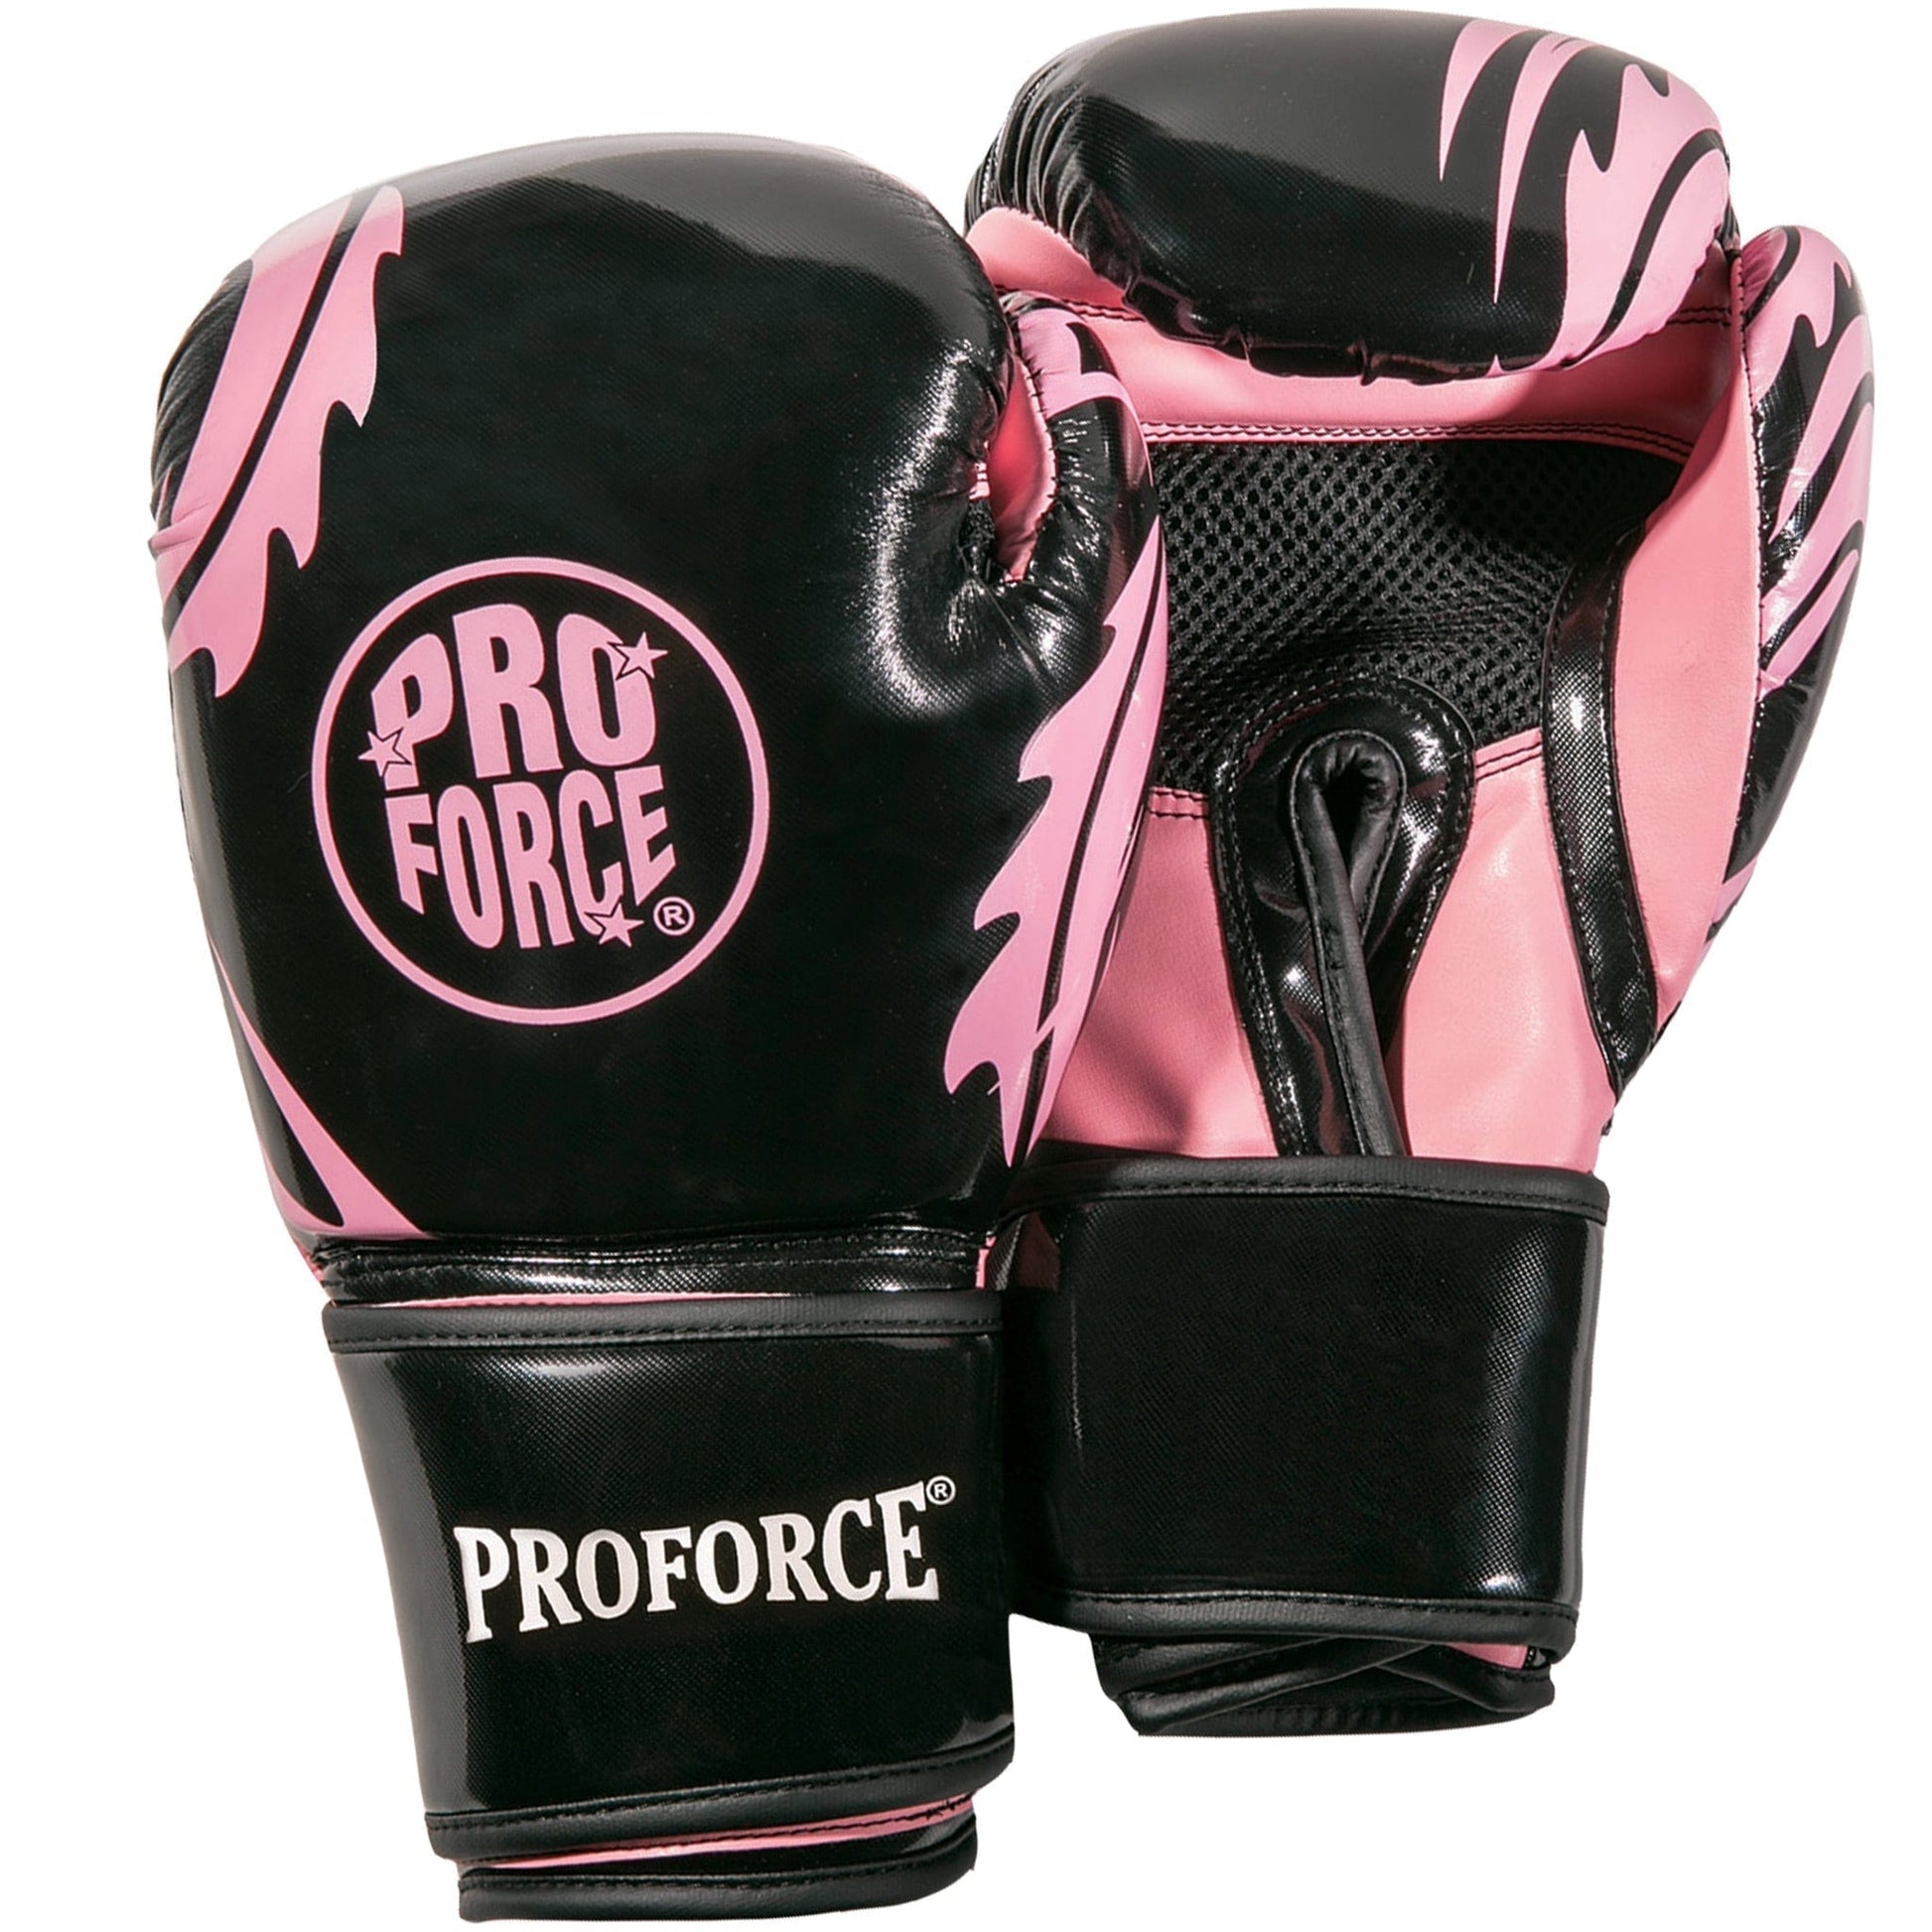 Proforce Boxing black/pink ProForce Combat Boxing Training Glove - 12 oz